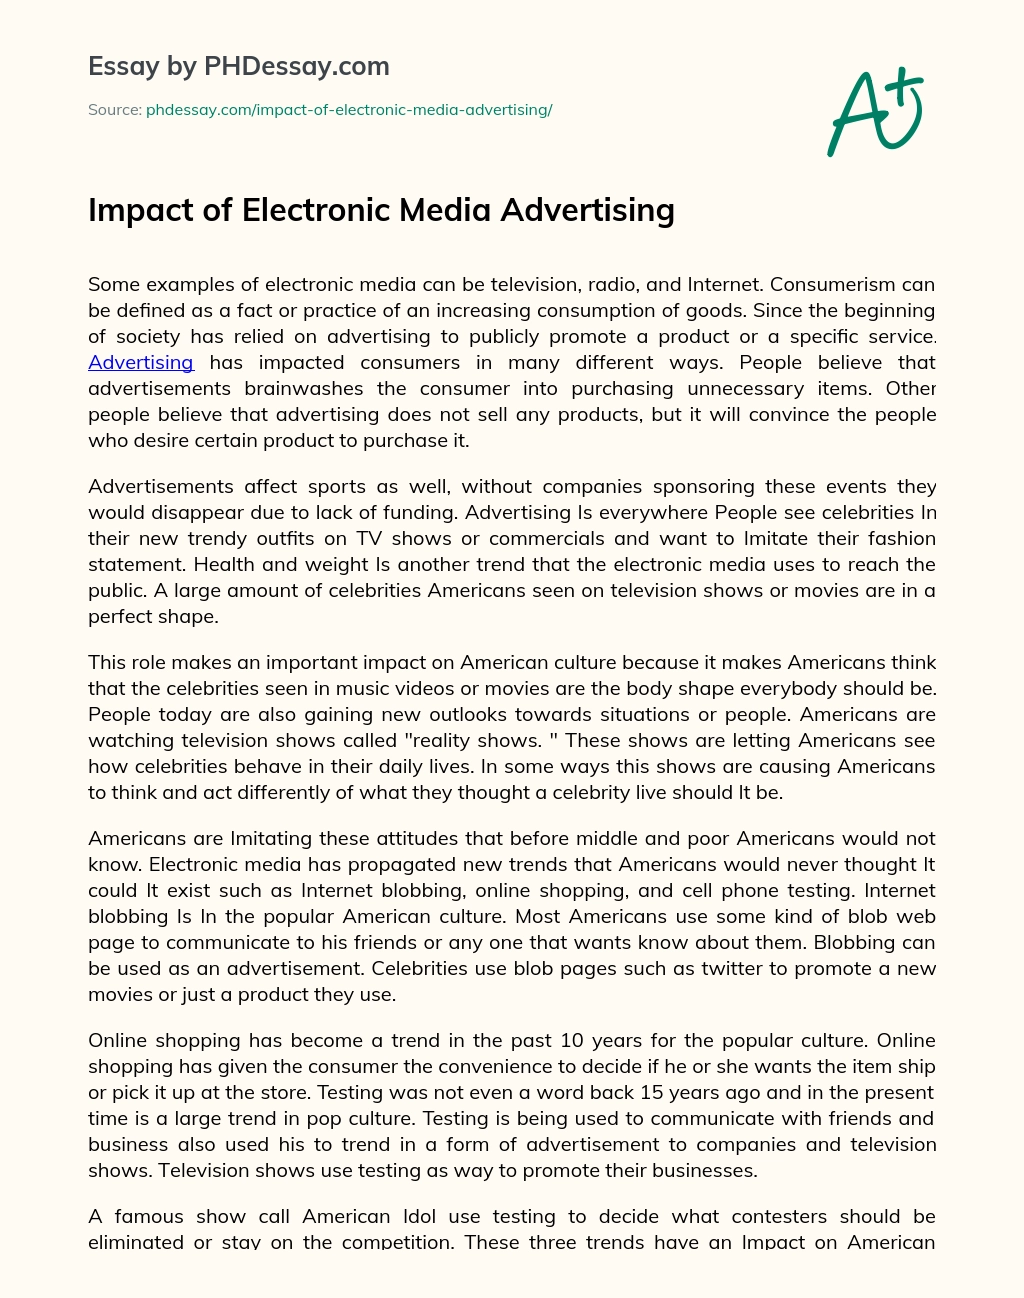 Impact of Electronic Media Advertising essay